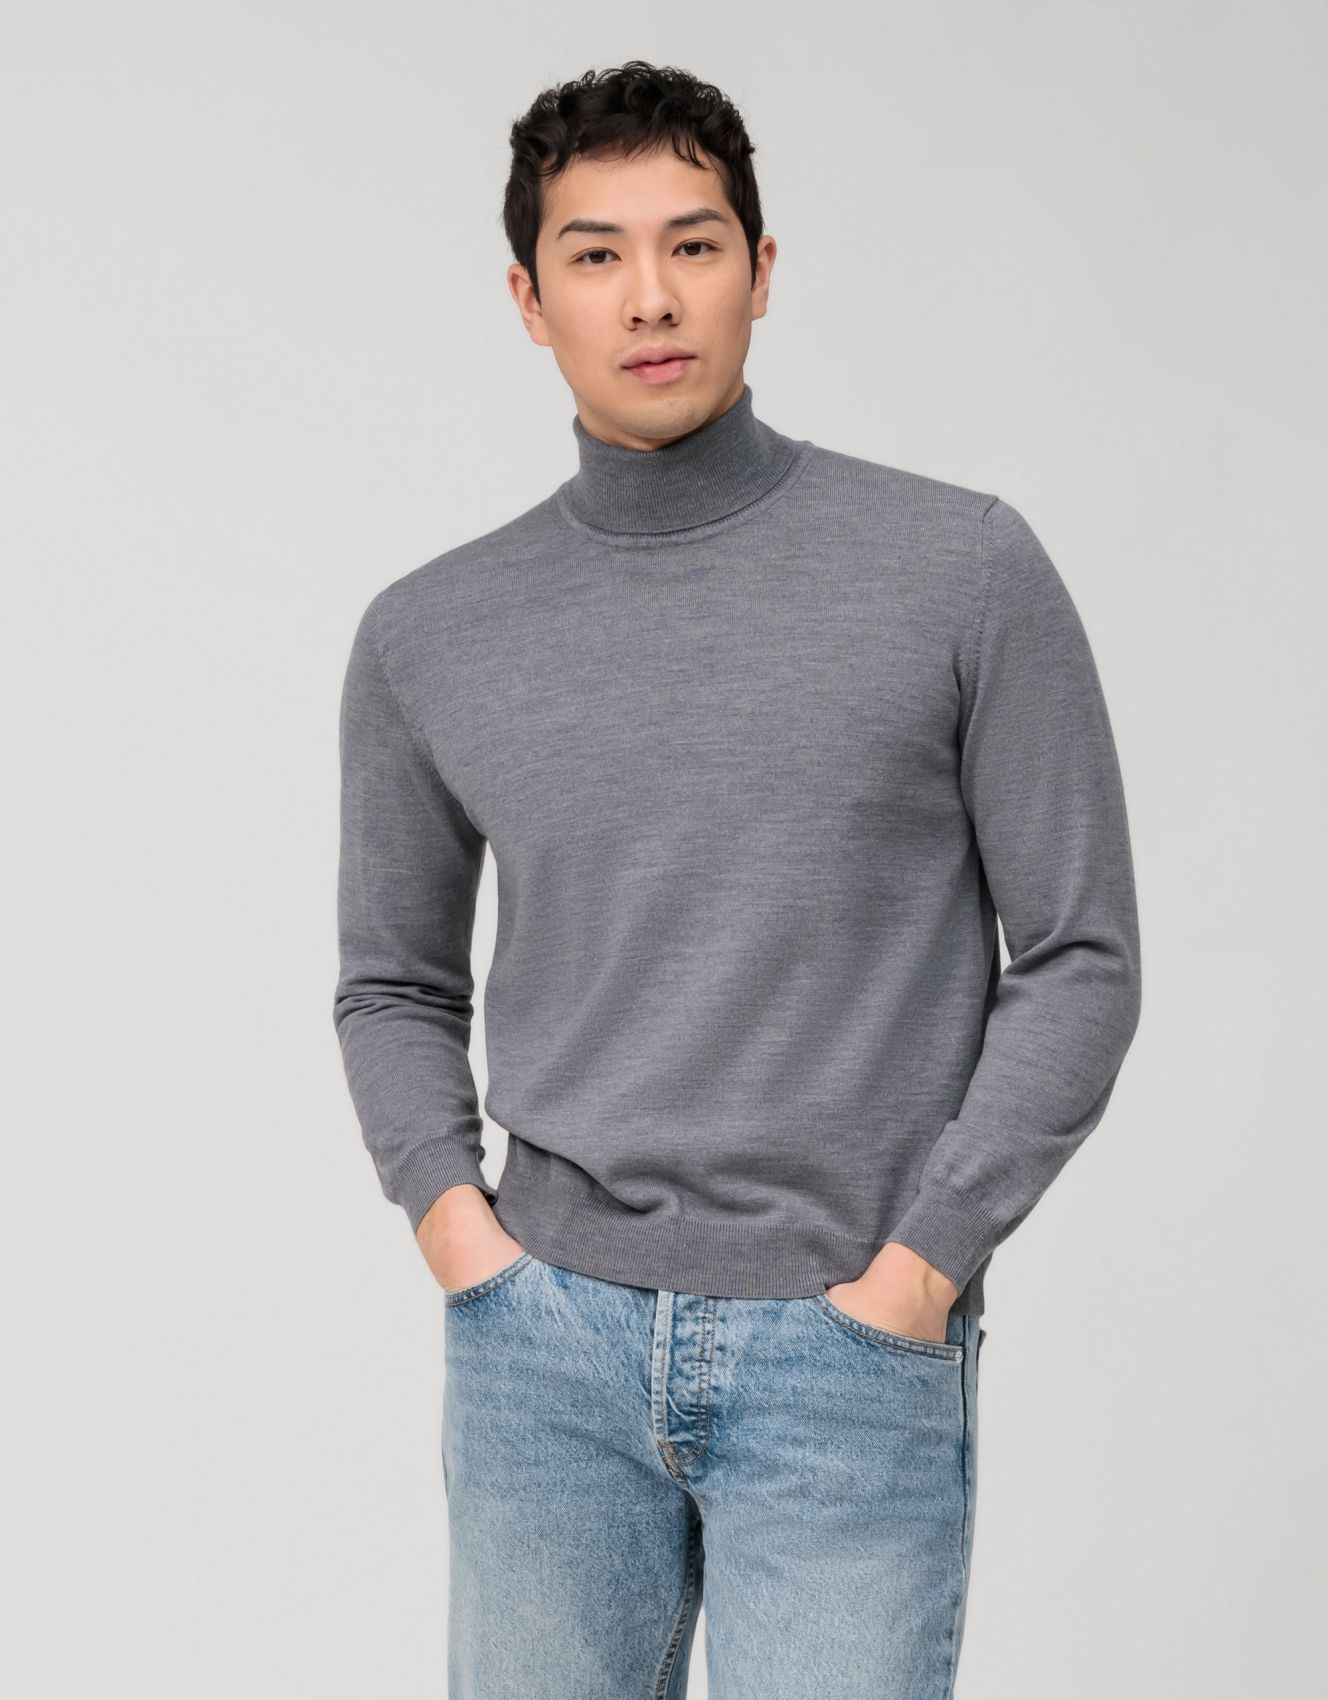 Olymp medium grey turtleneck sweater in extra fine merino wool - Men's  clothing online store